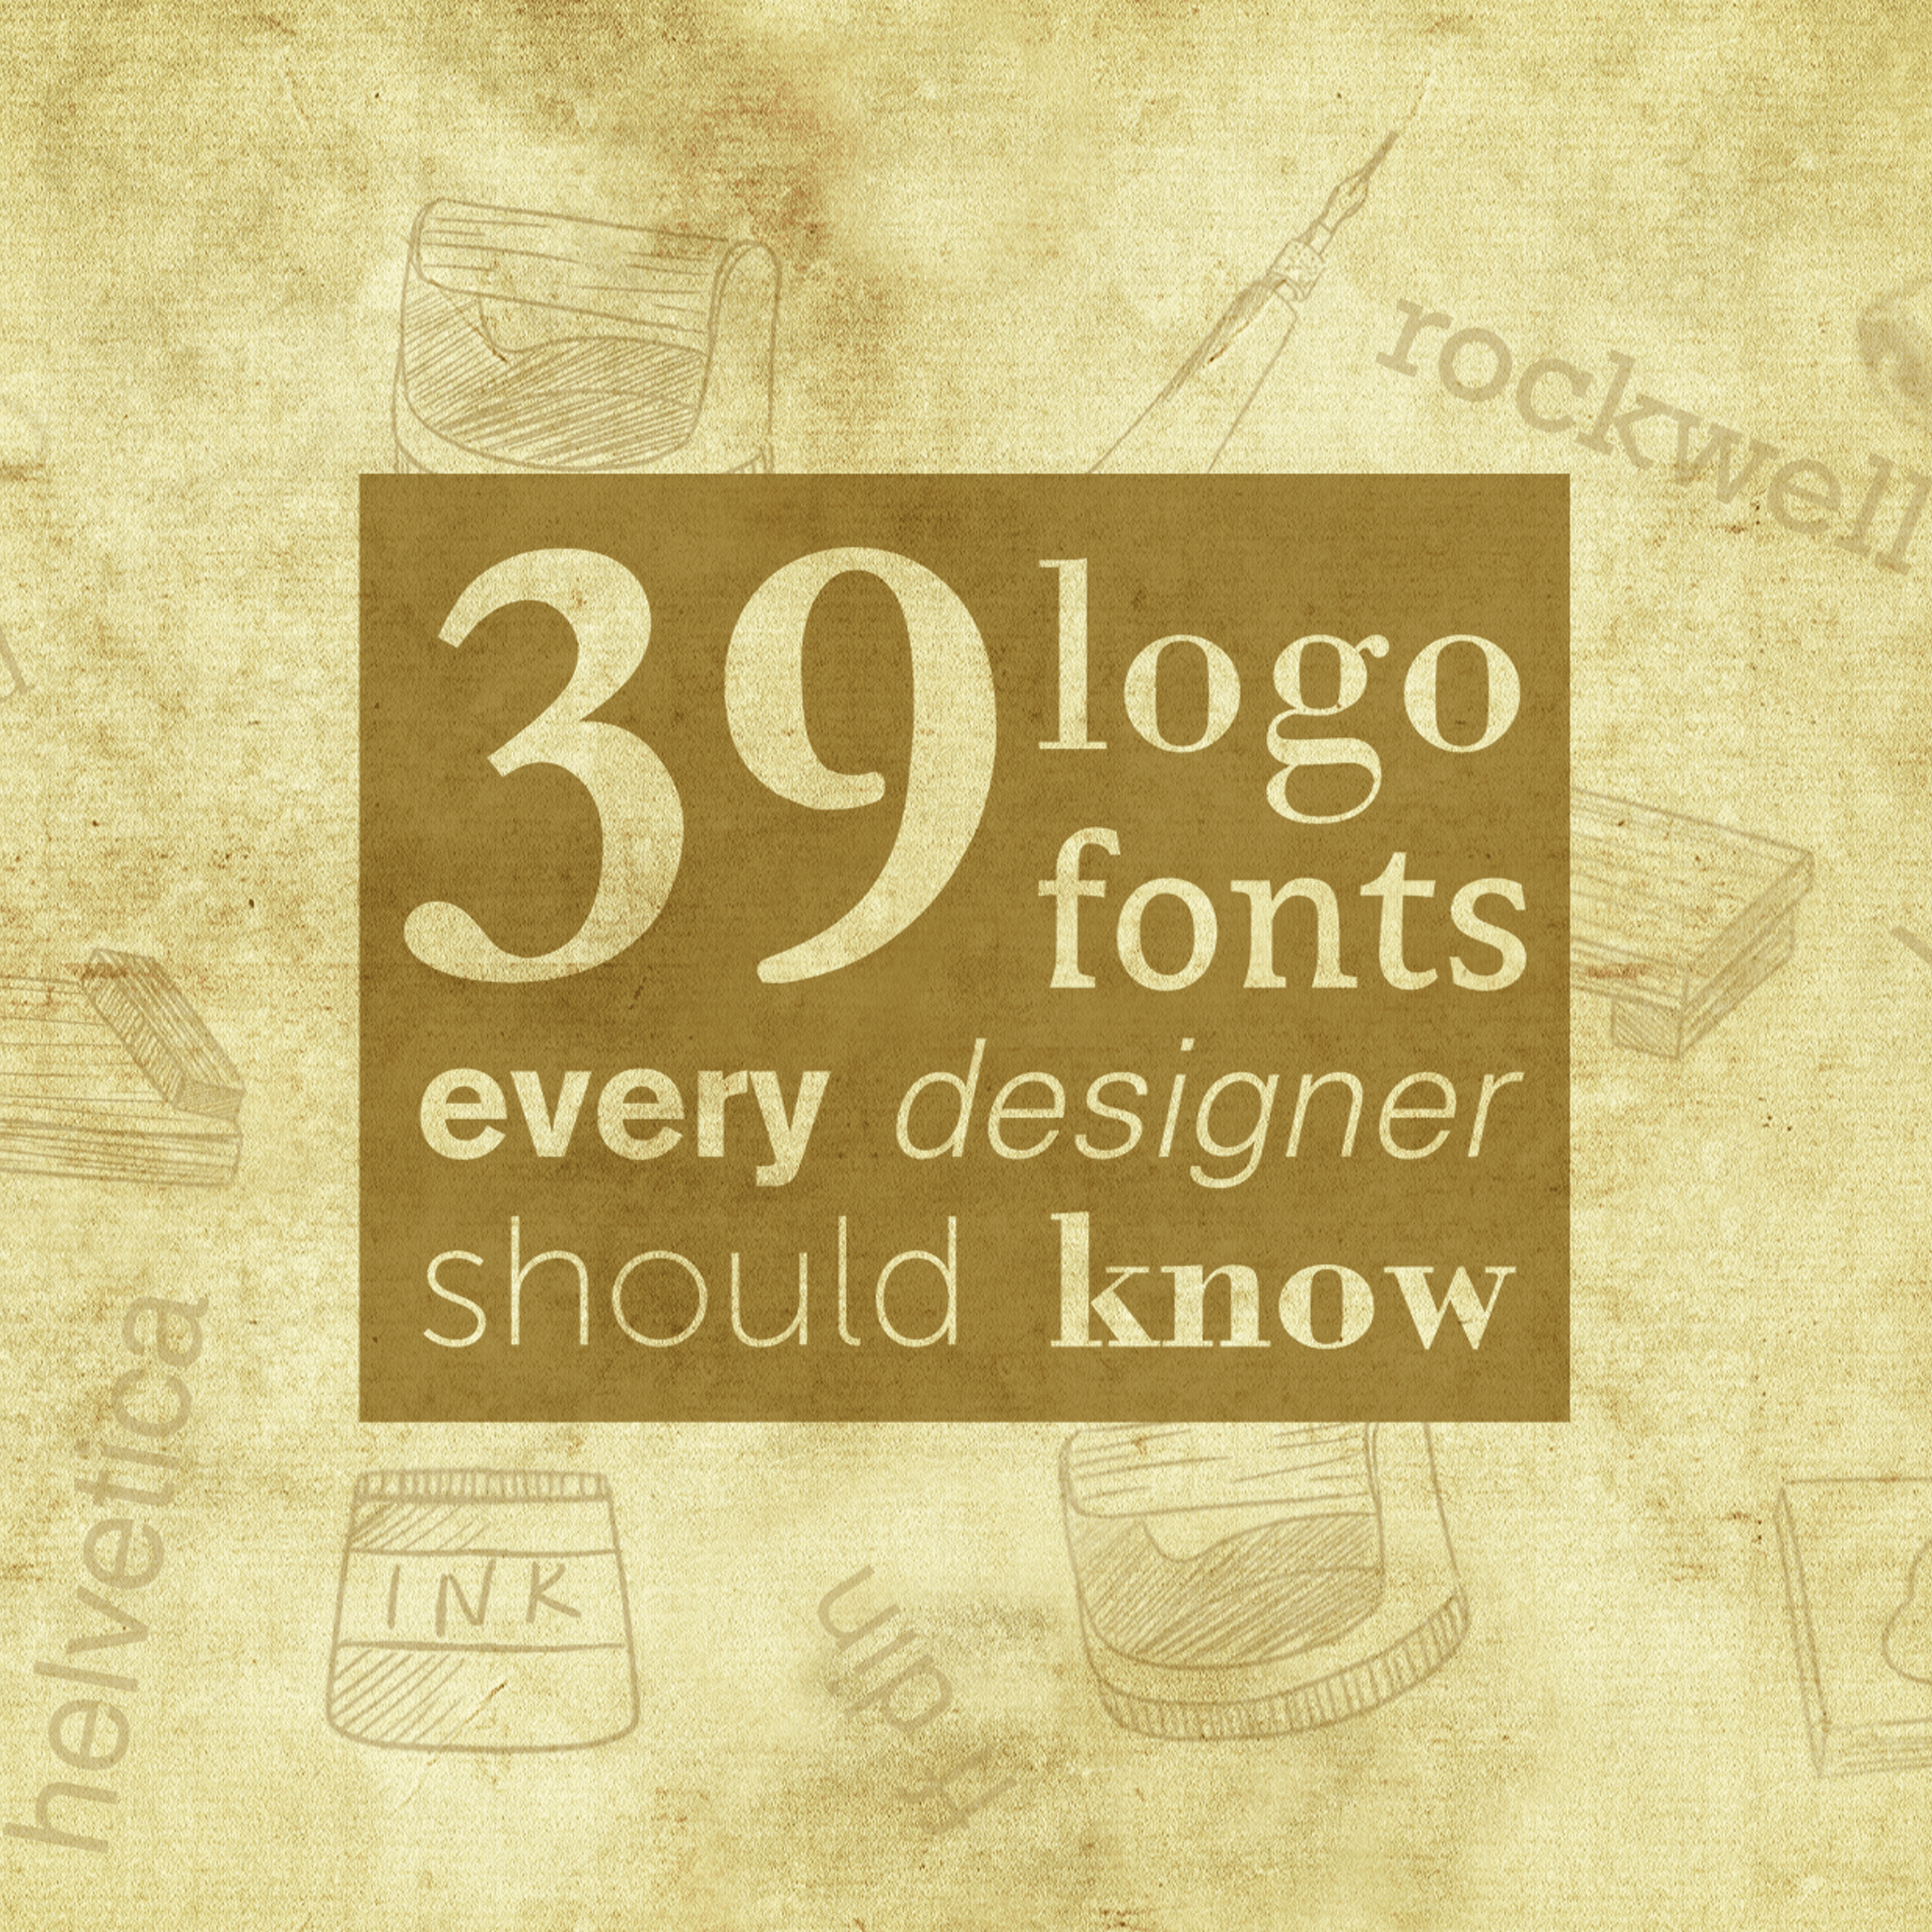 Should Logo - logo fonts everyone should know